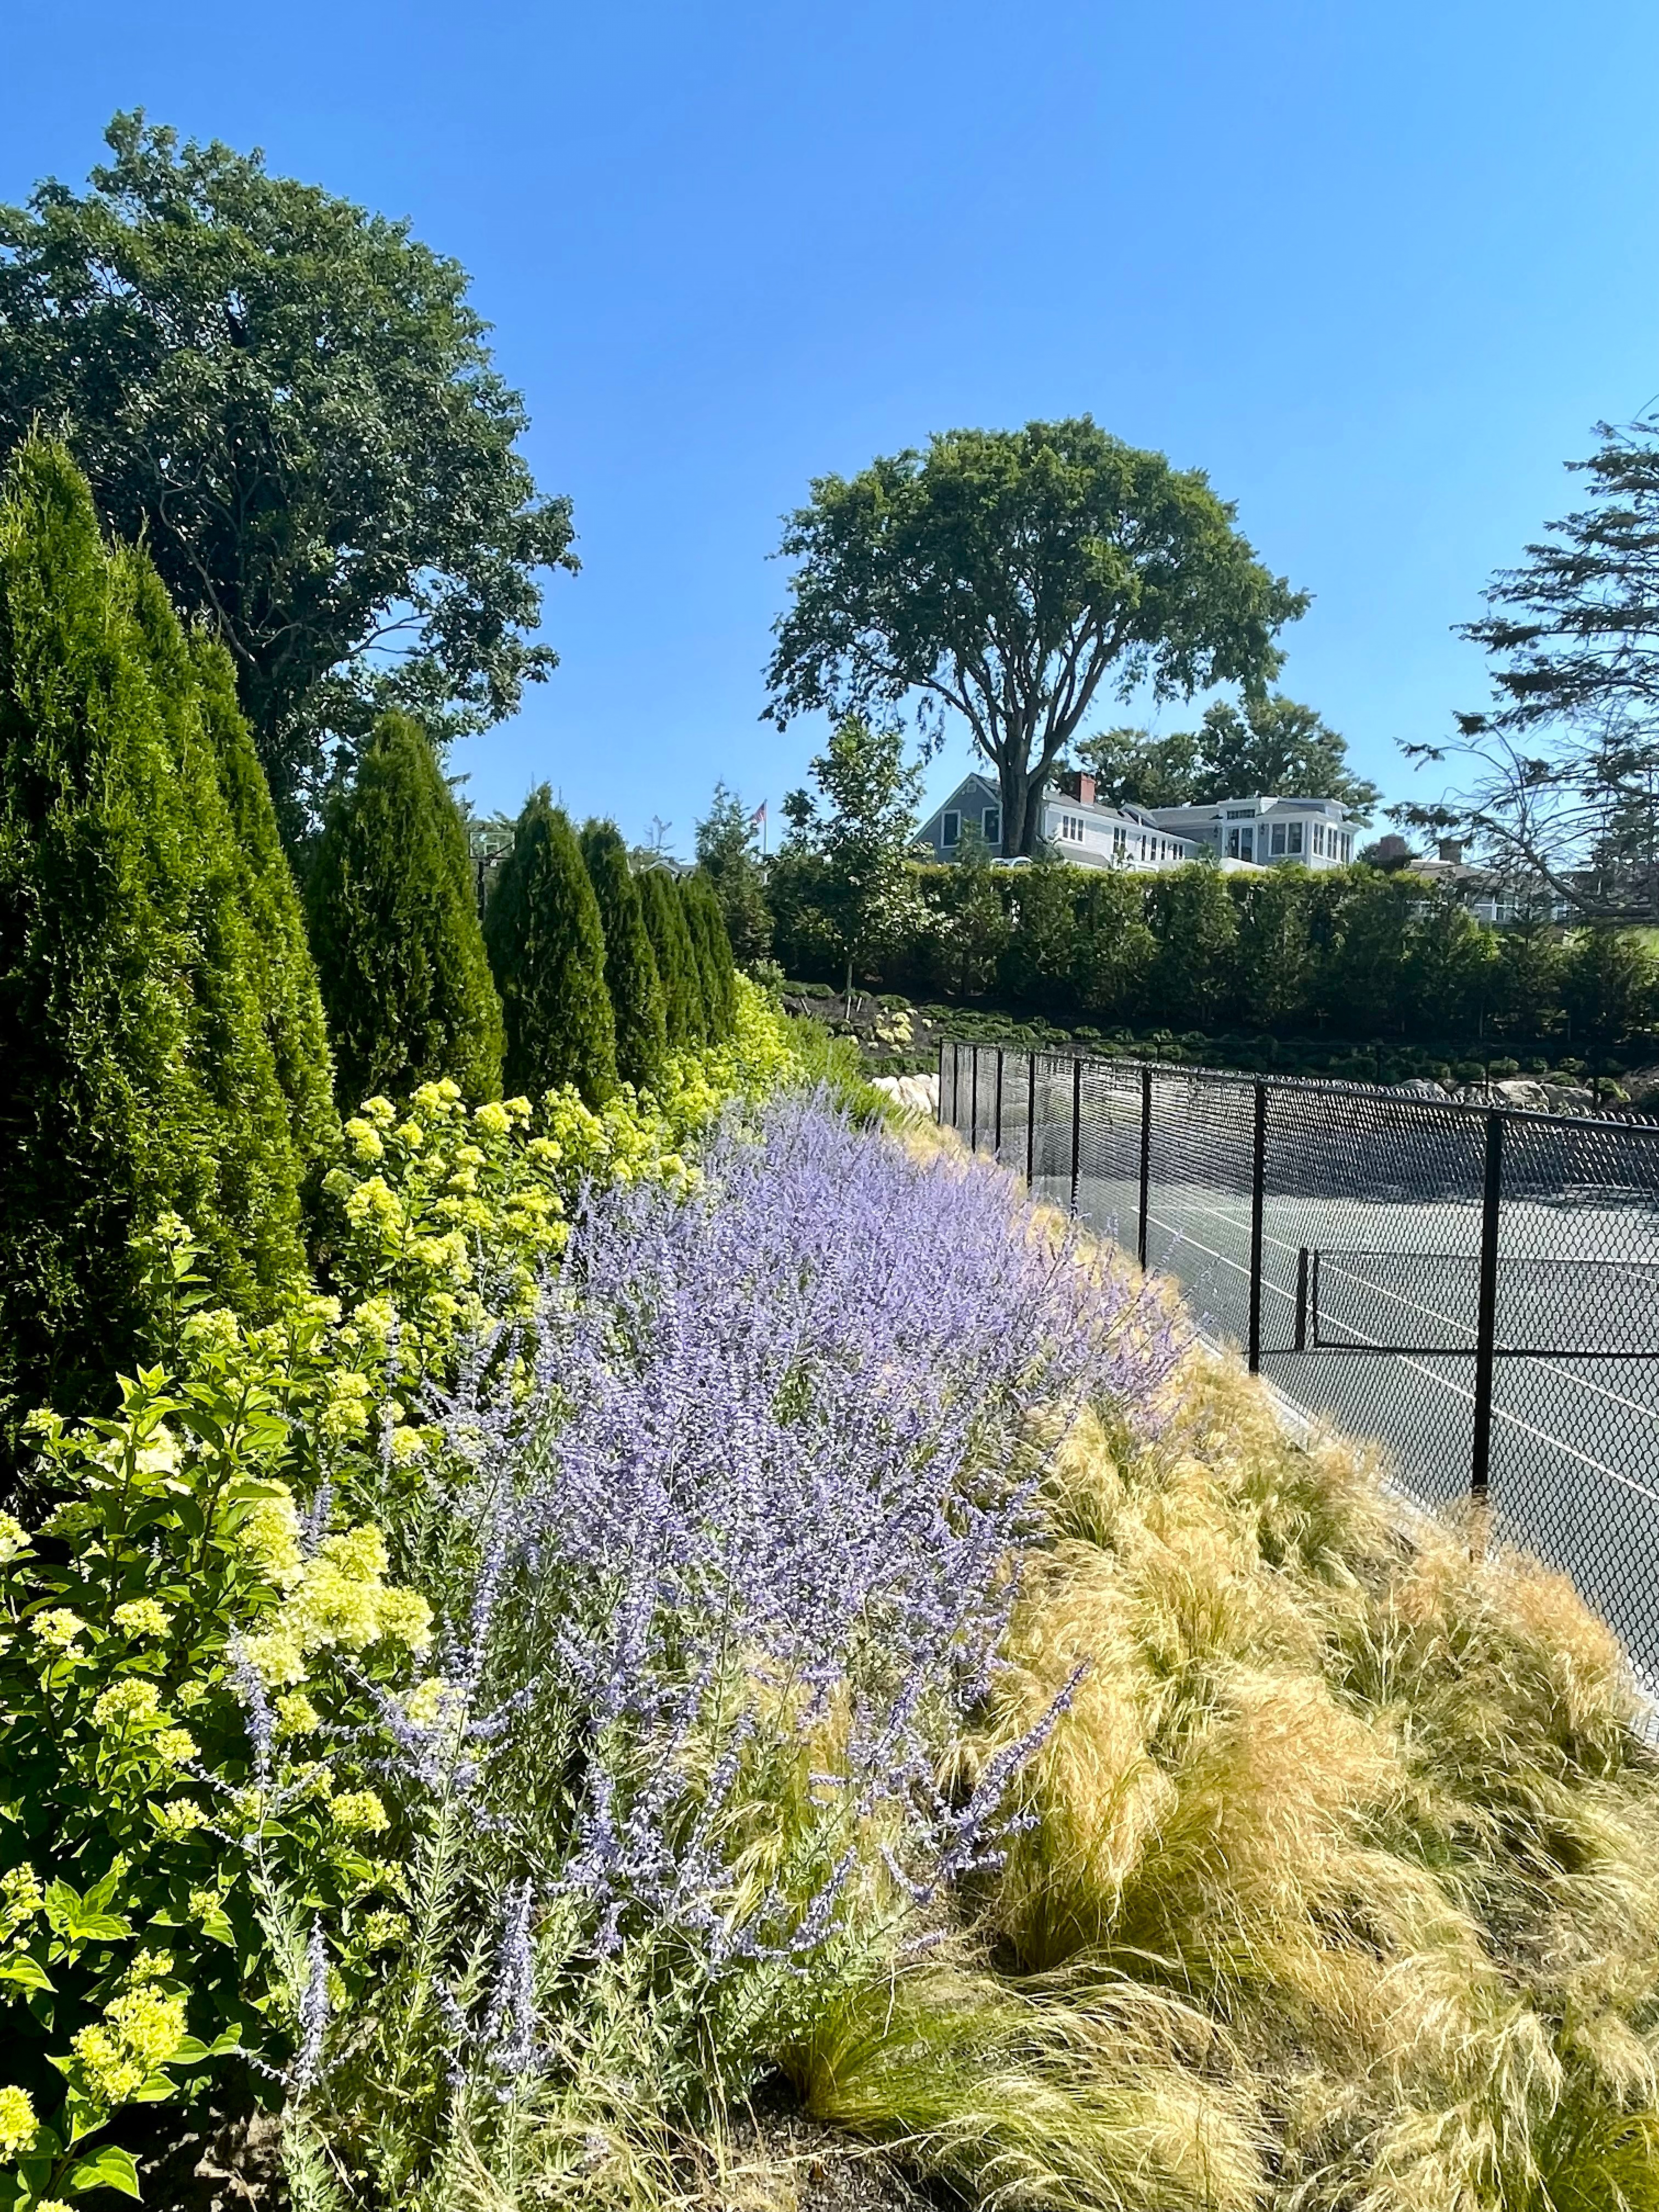 close up of flowering plants around tennis court